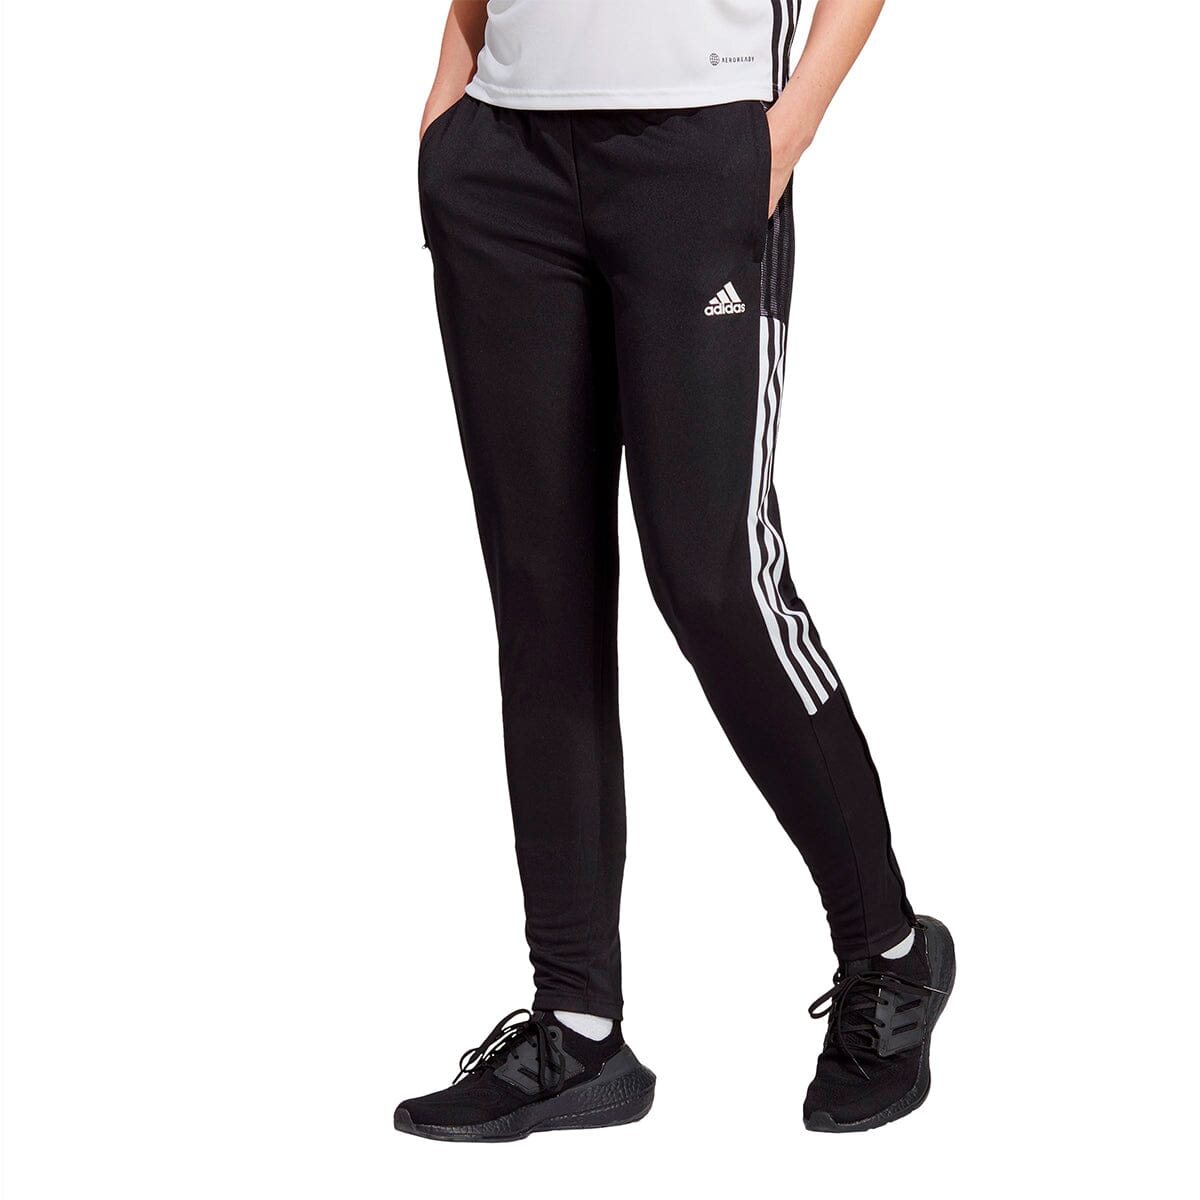 TOP SHELF Stretchable Women's Soccer Pants